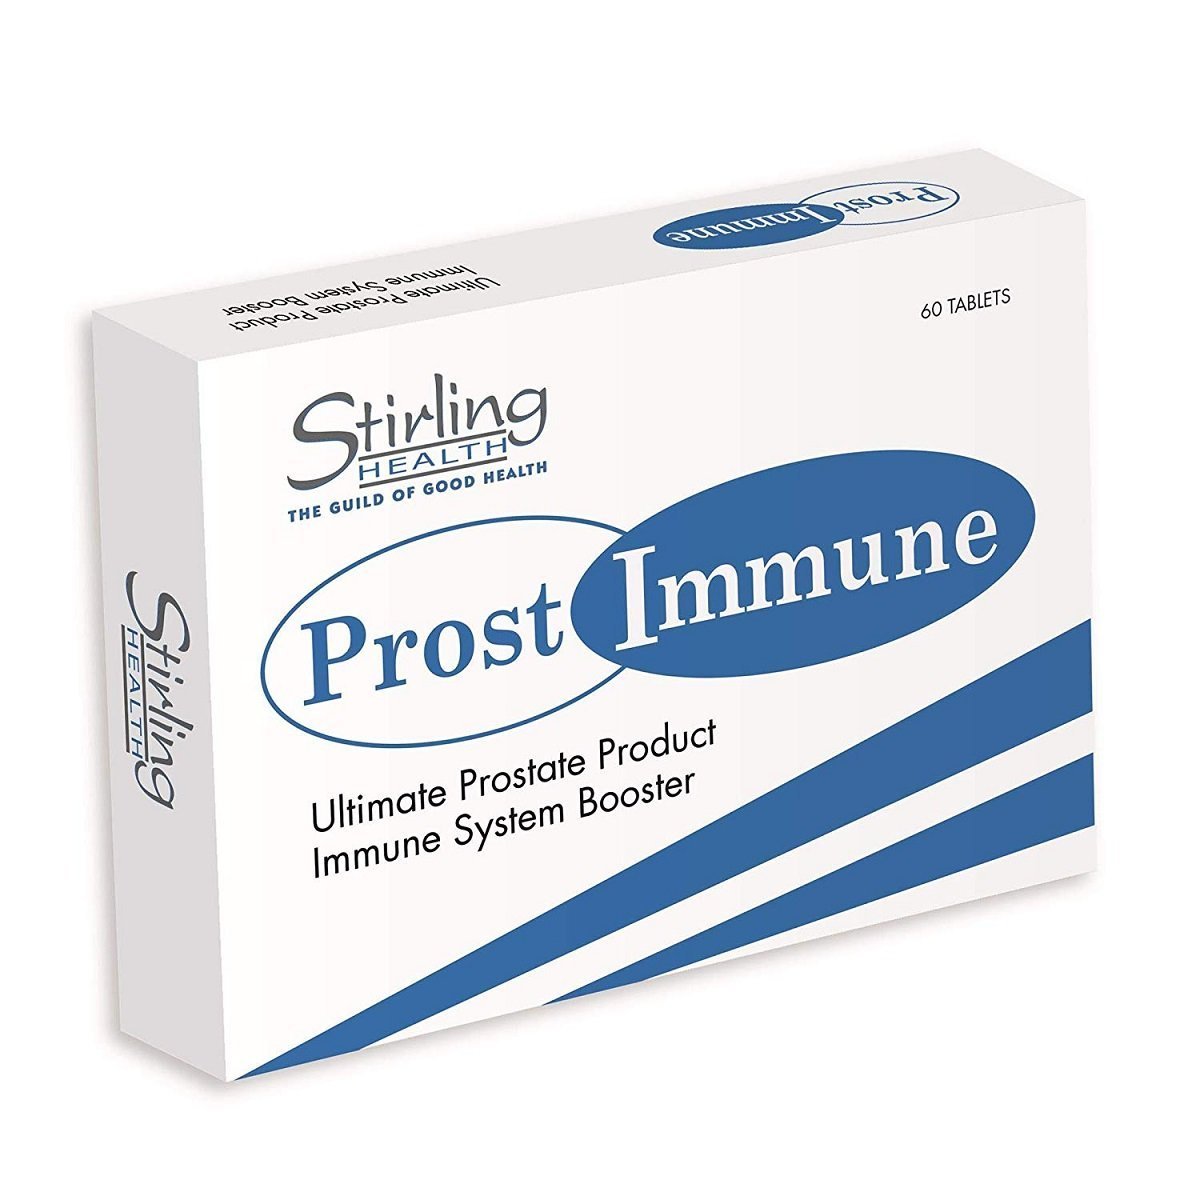 ProstImmune-60 tablets